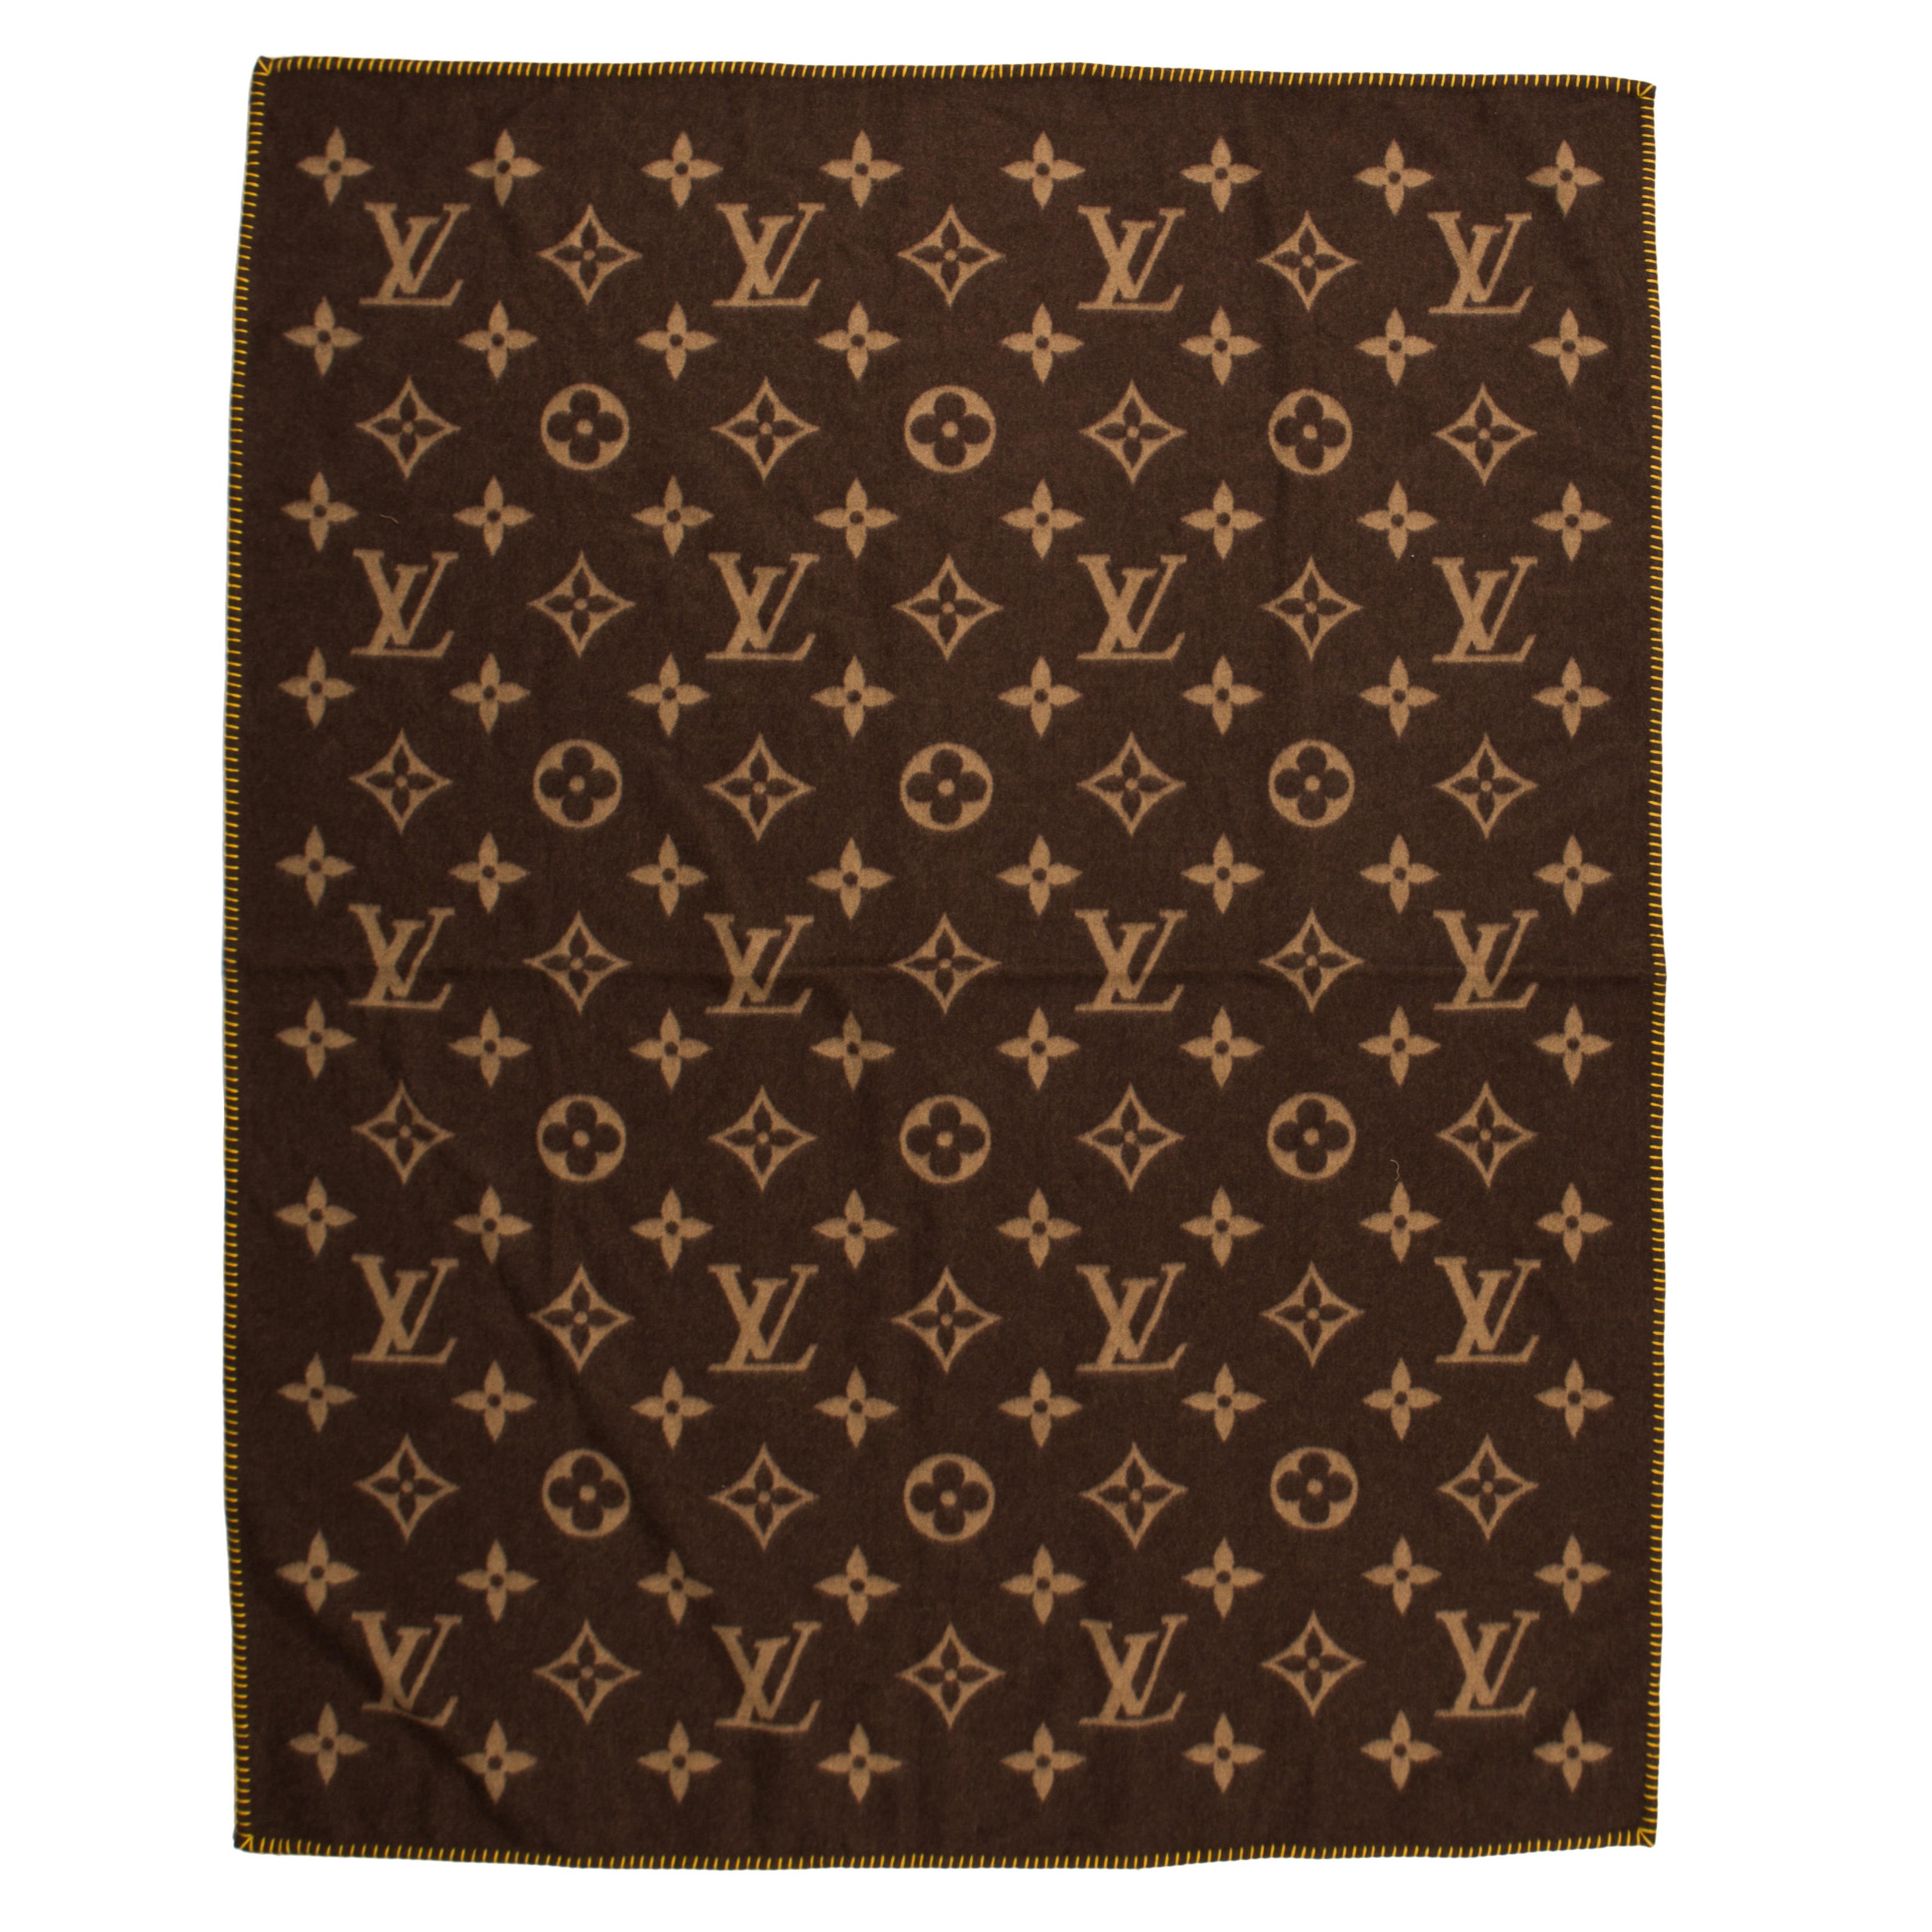 Louis Vuitton White Logo Monogram Brown Luxury Brands Blanket